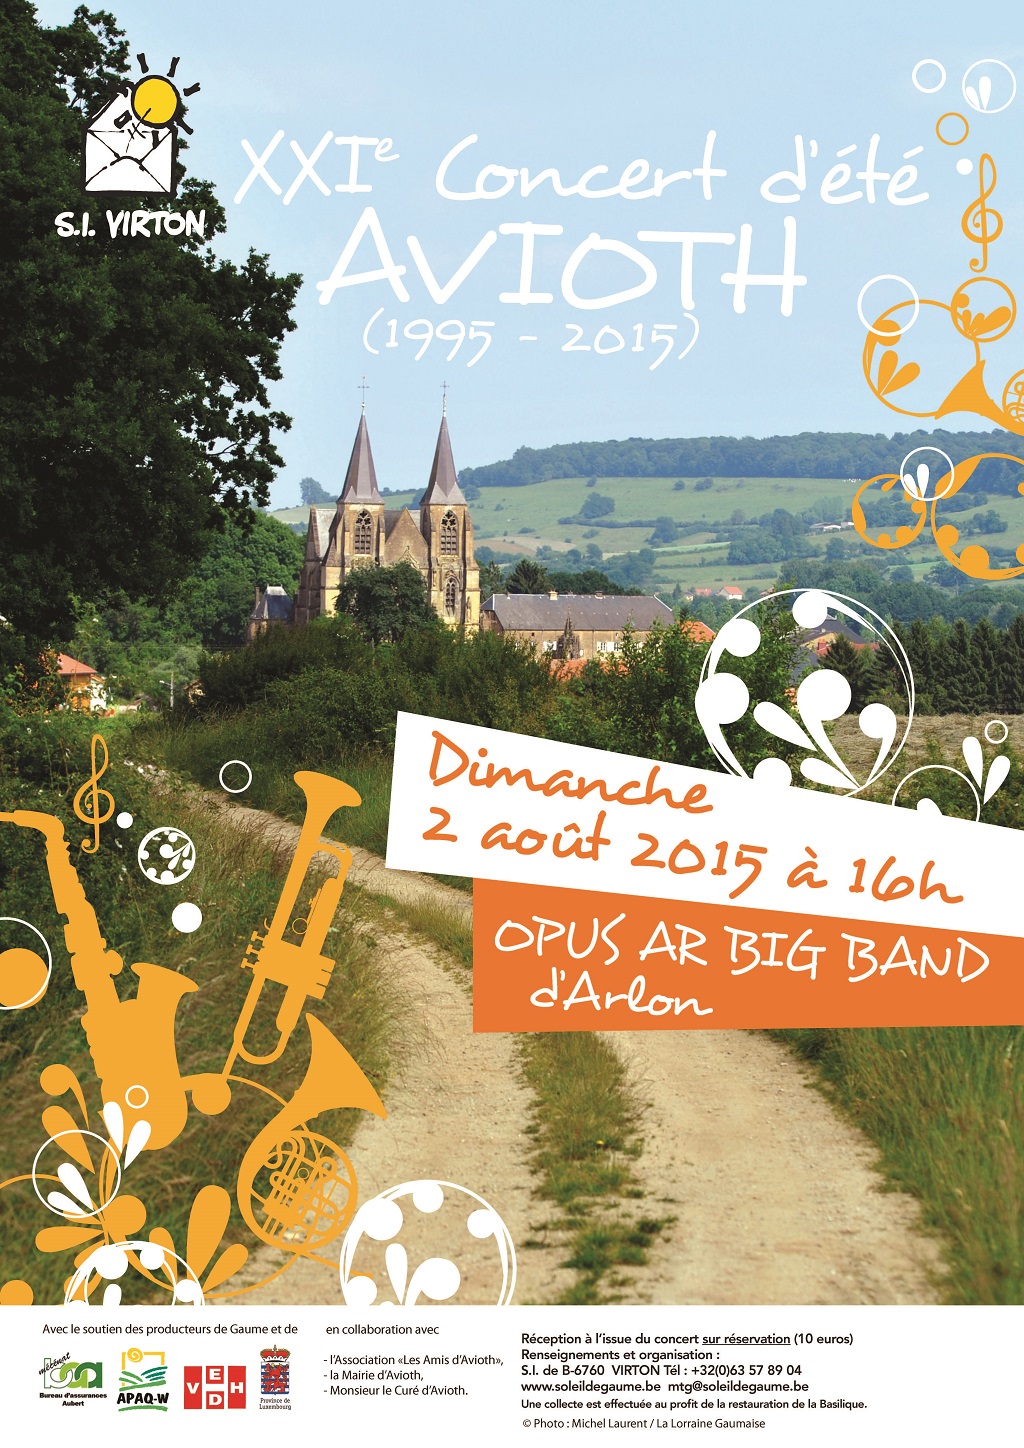 Avioth : concert à la Basilique